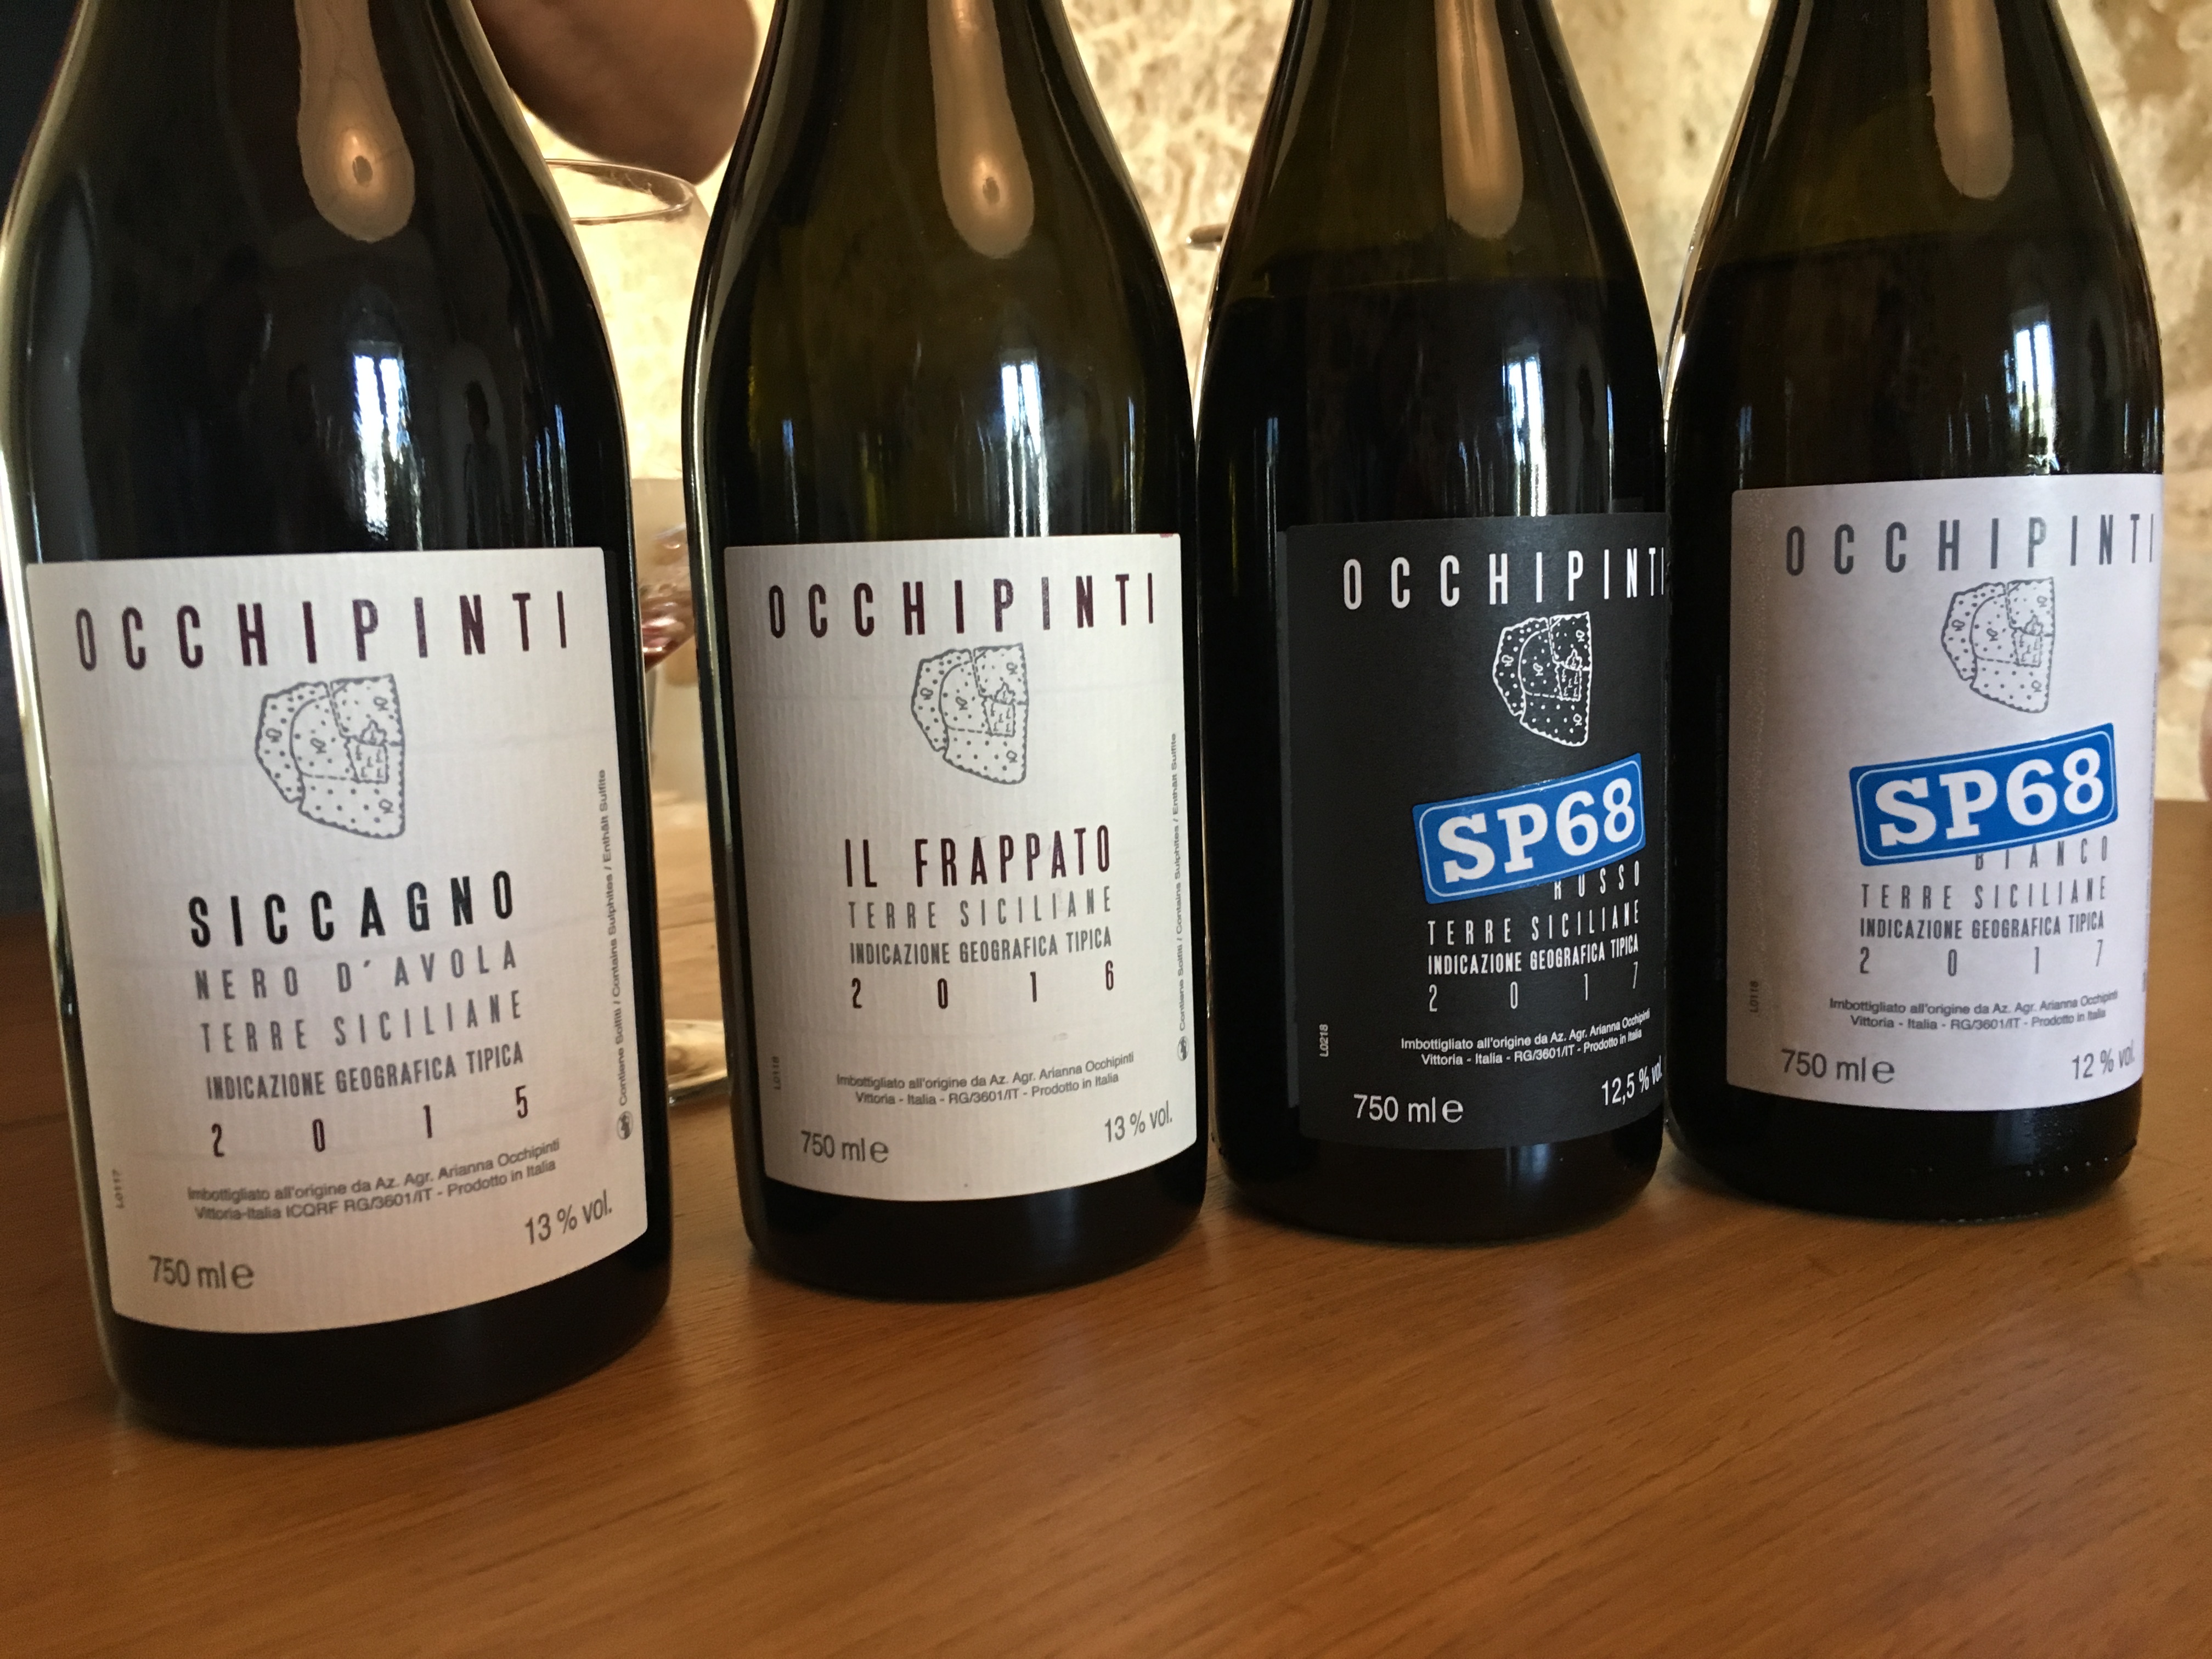 Occhipinti wine lineup